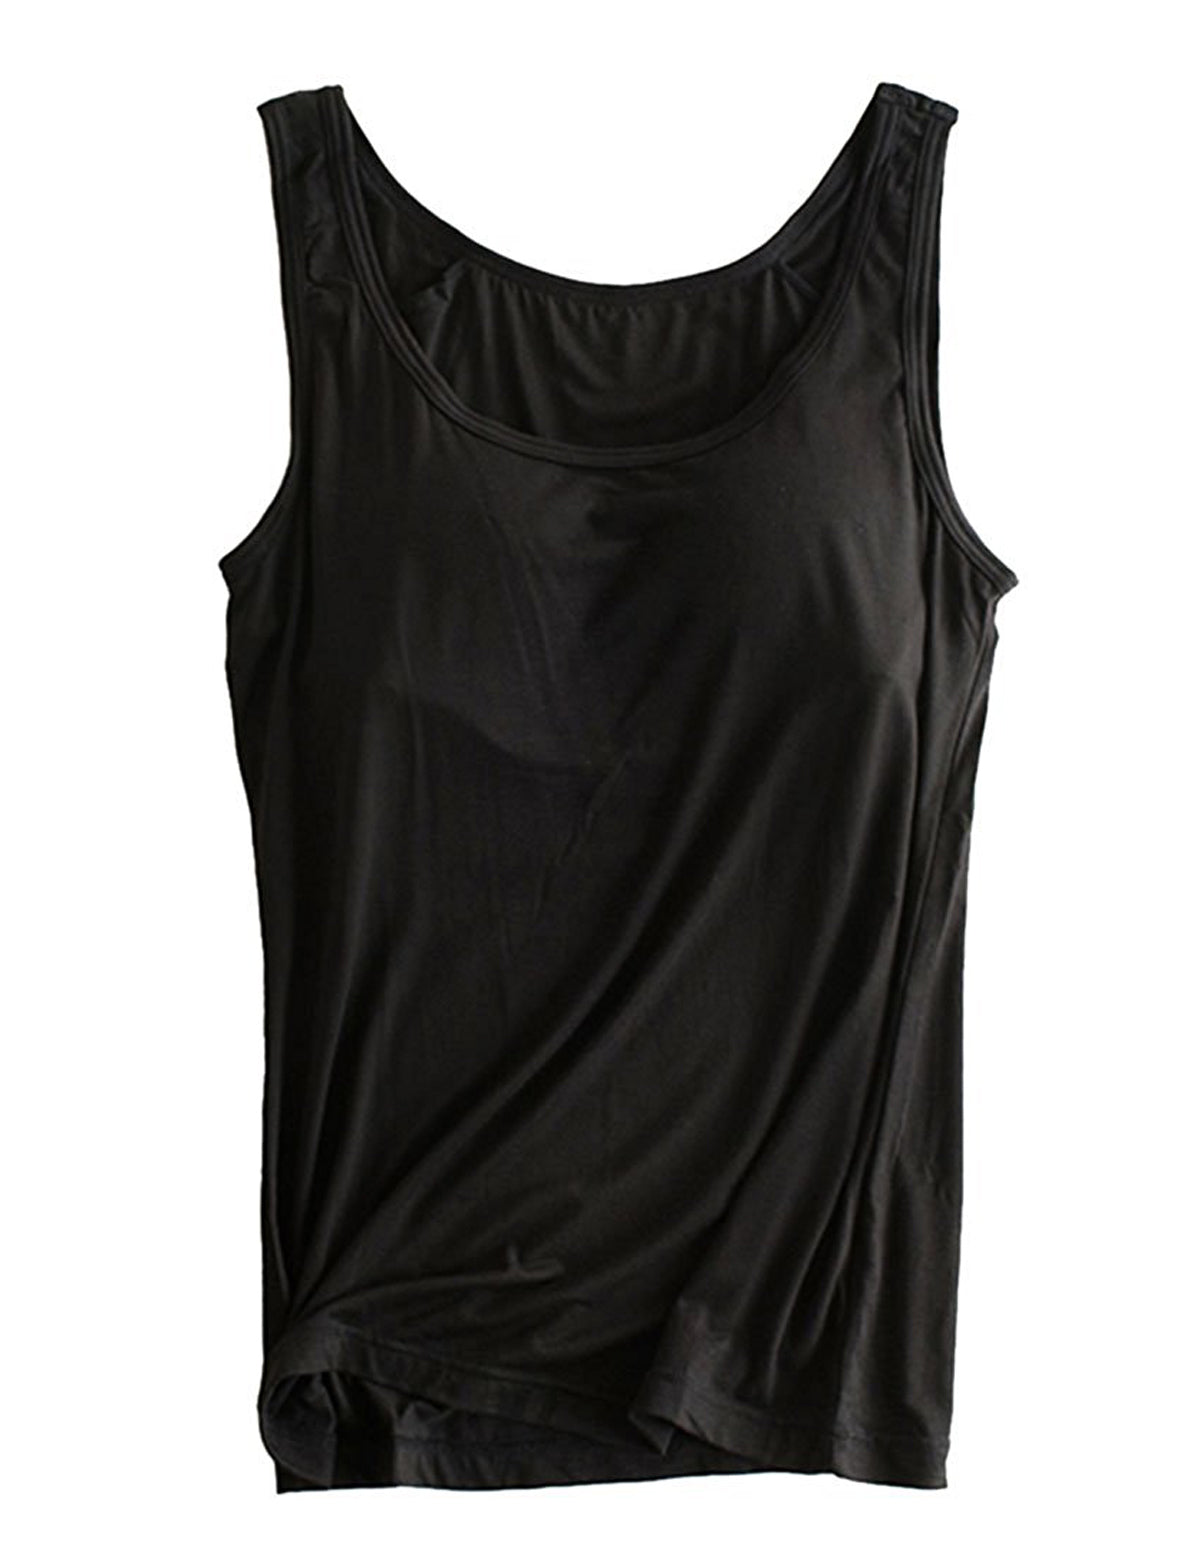 Elita Women's Classic Fit Camisole With Built-In Shelf Bra - Black -  ShopStyle